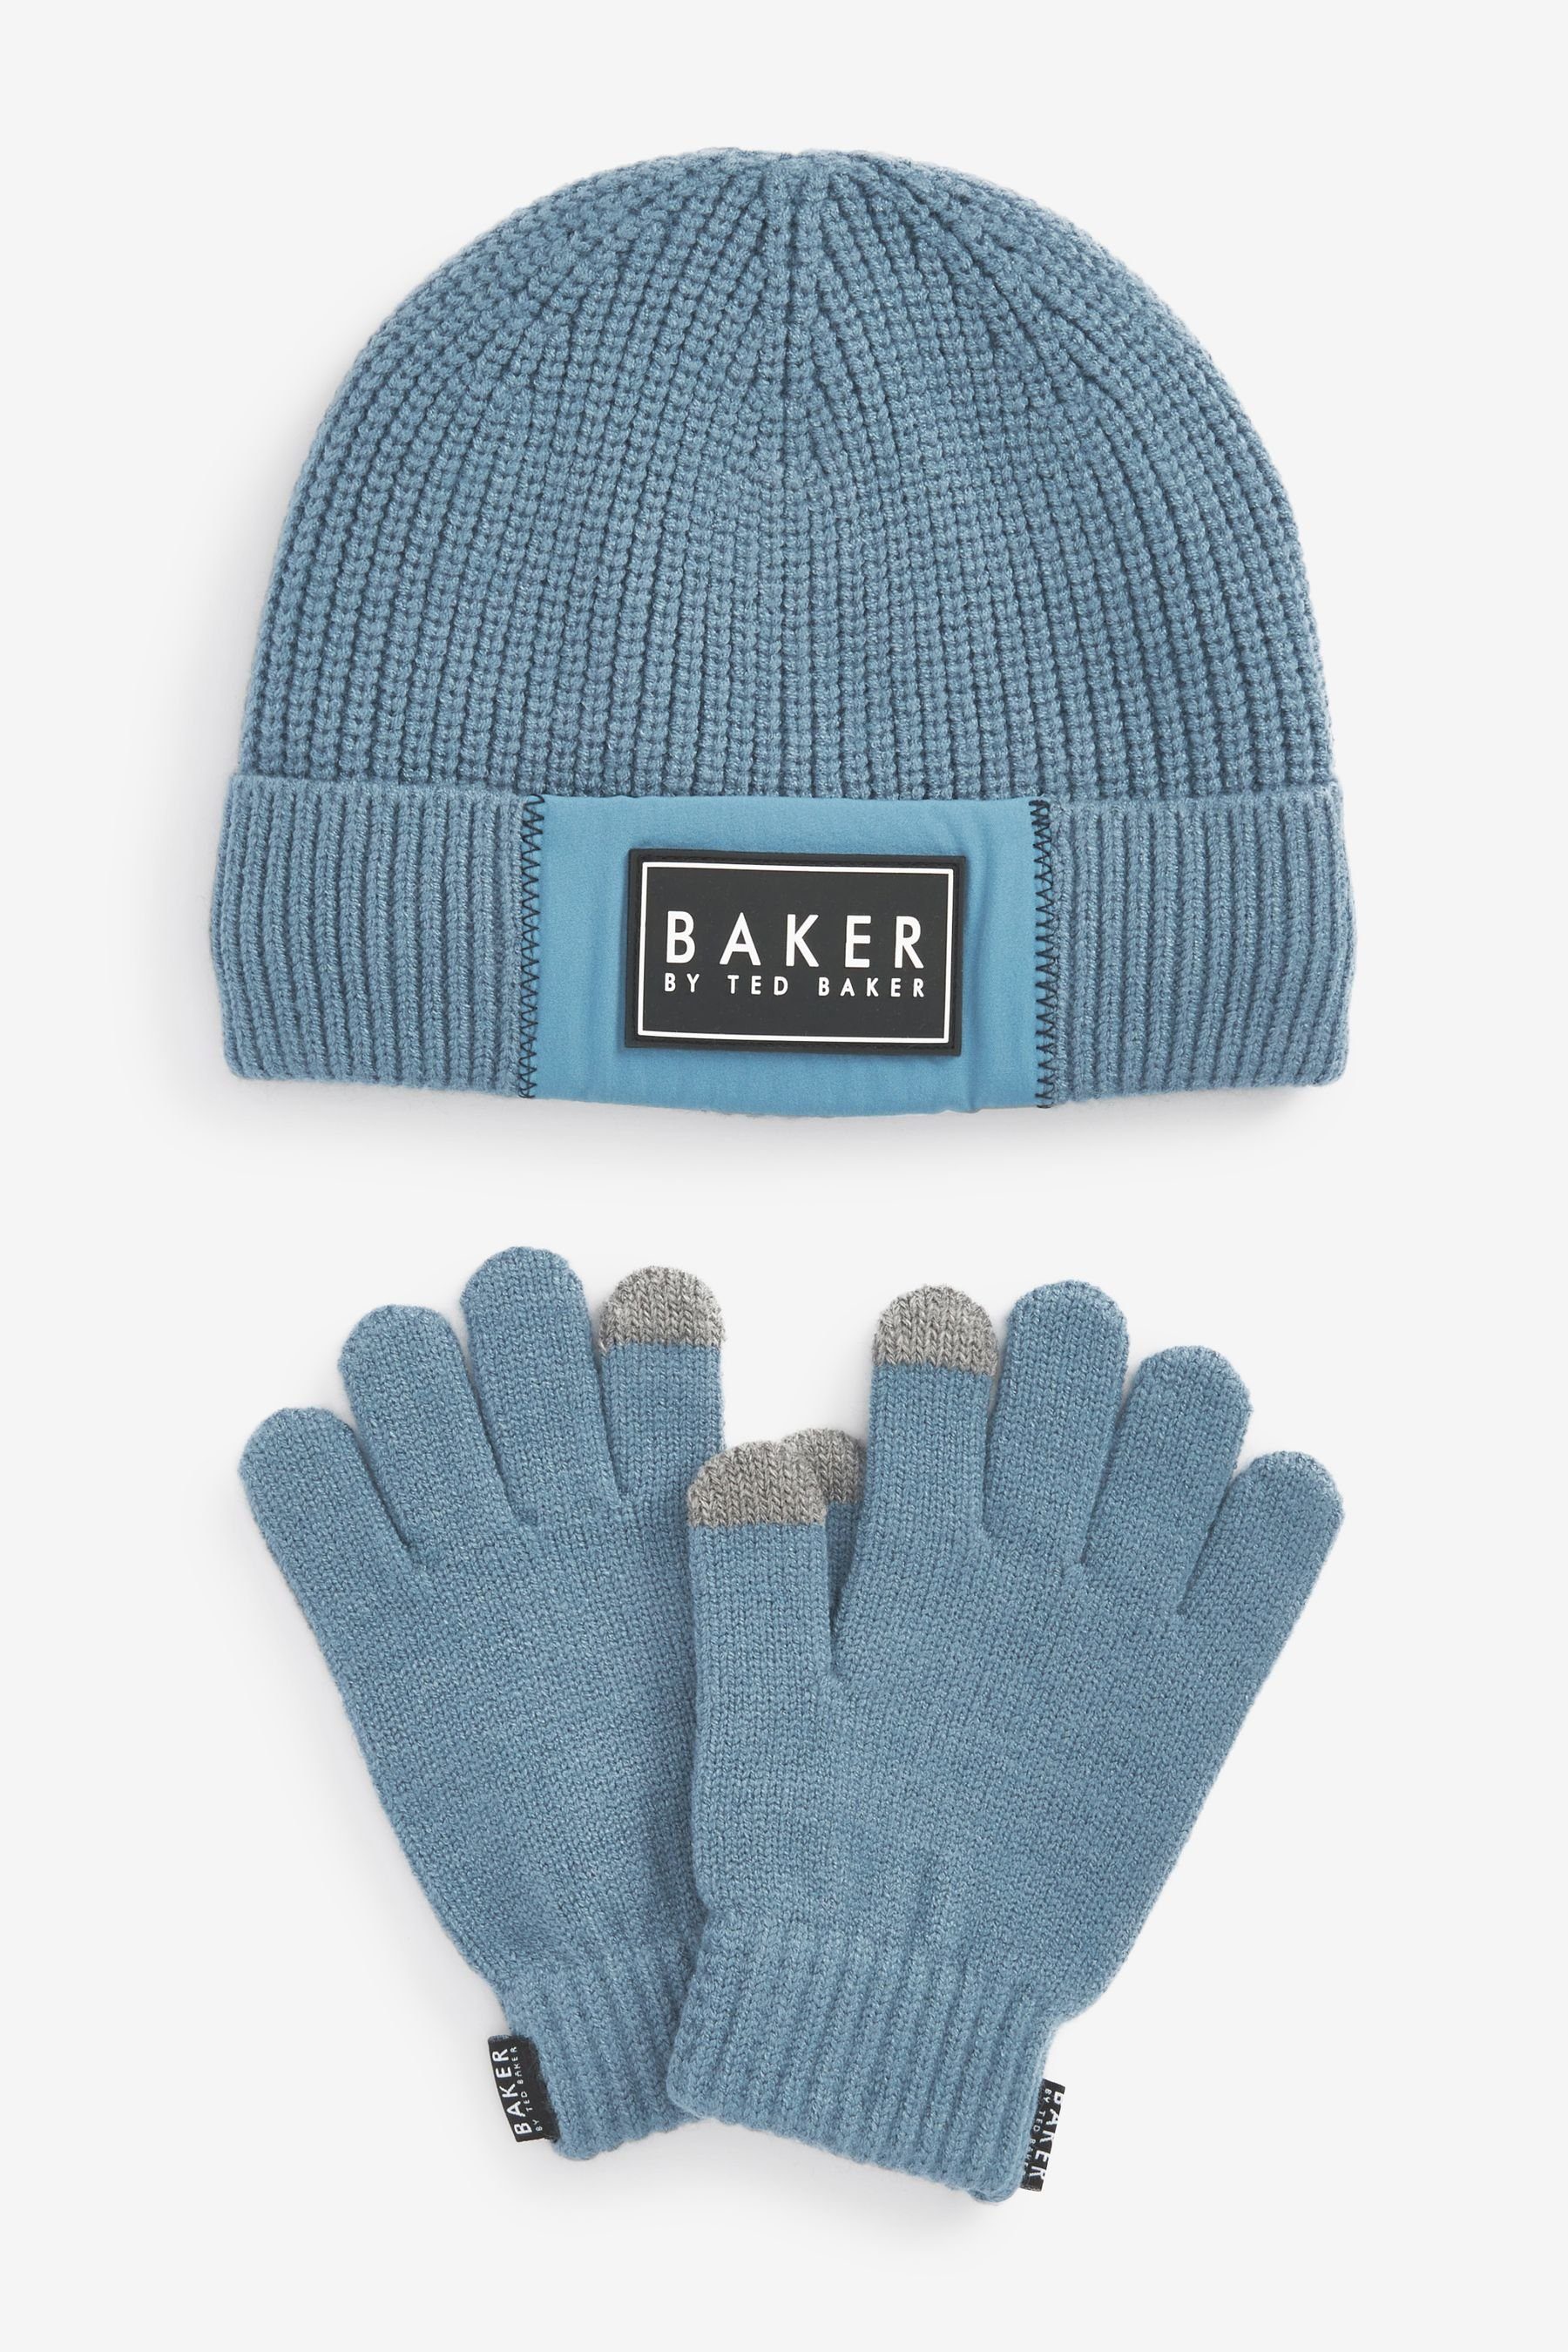 by Ted (2-St) Baker Handschuhen aus Set Blue Beanie Mütze Ted Baker und Baker by Baker